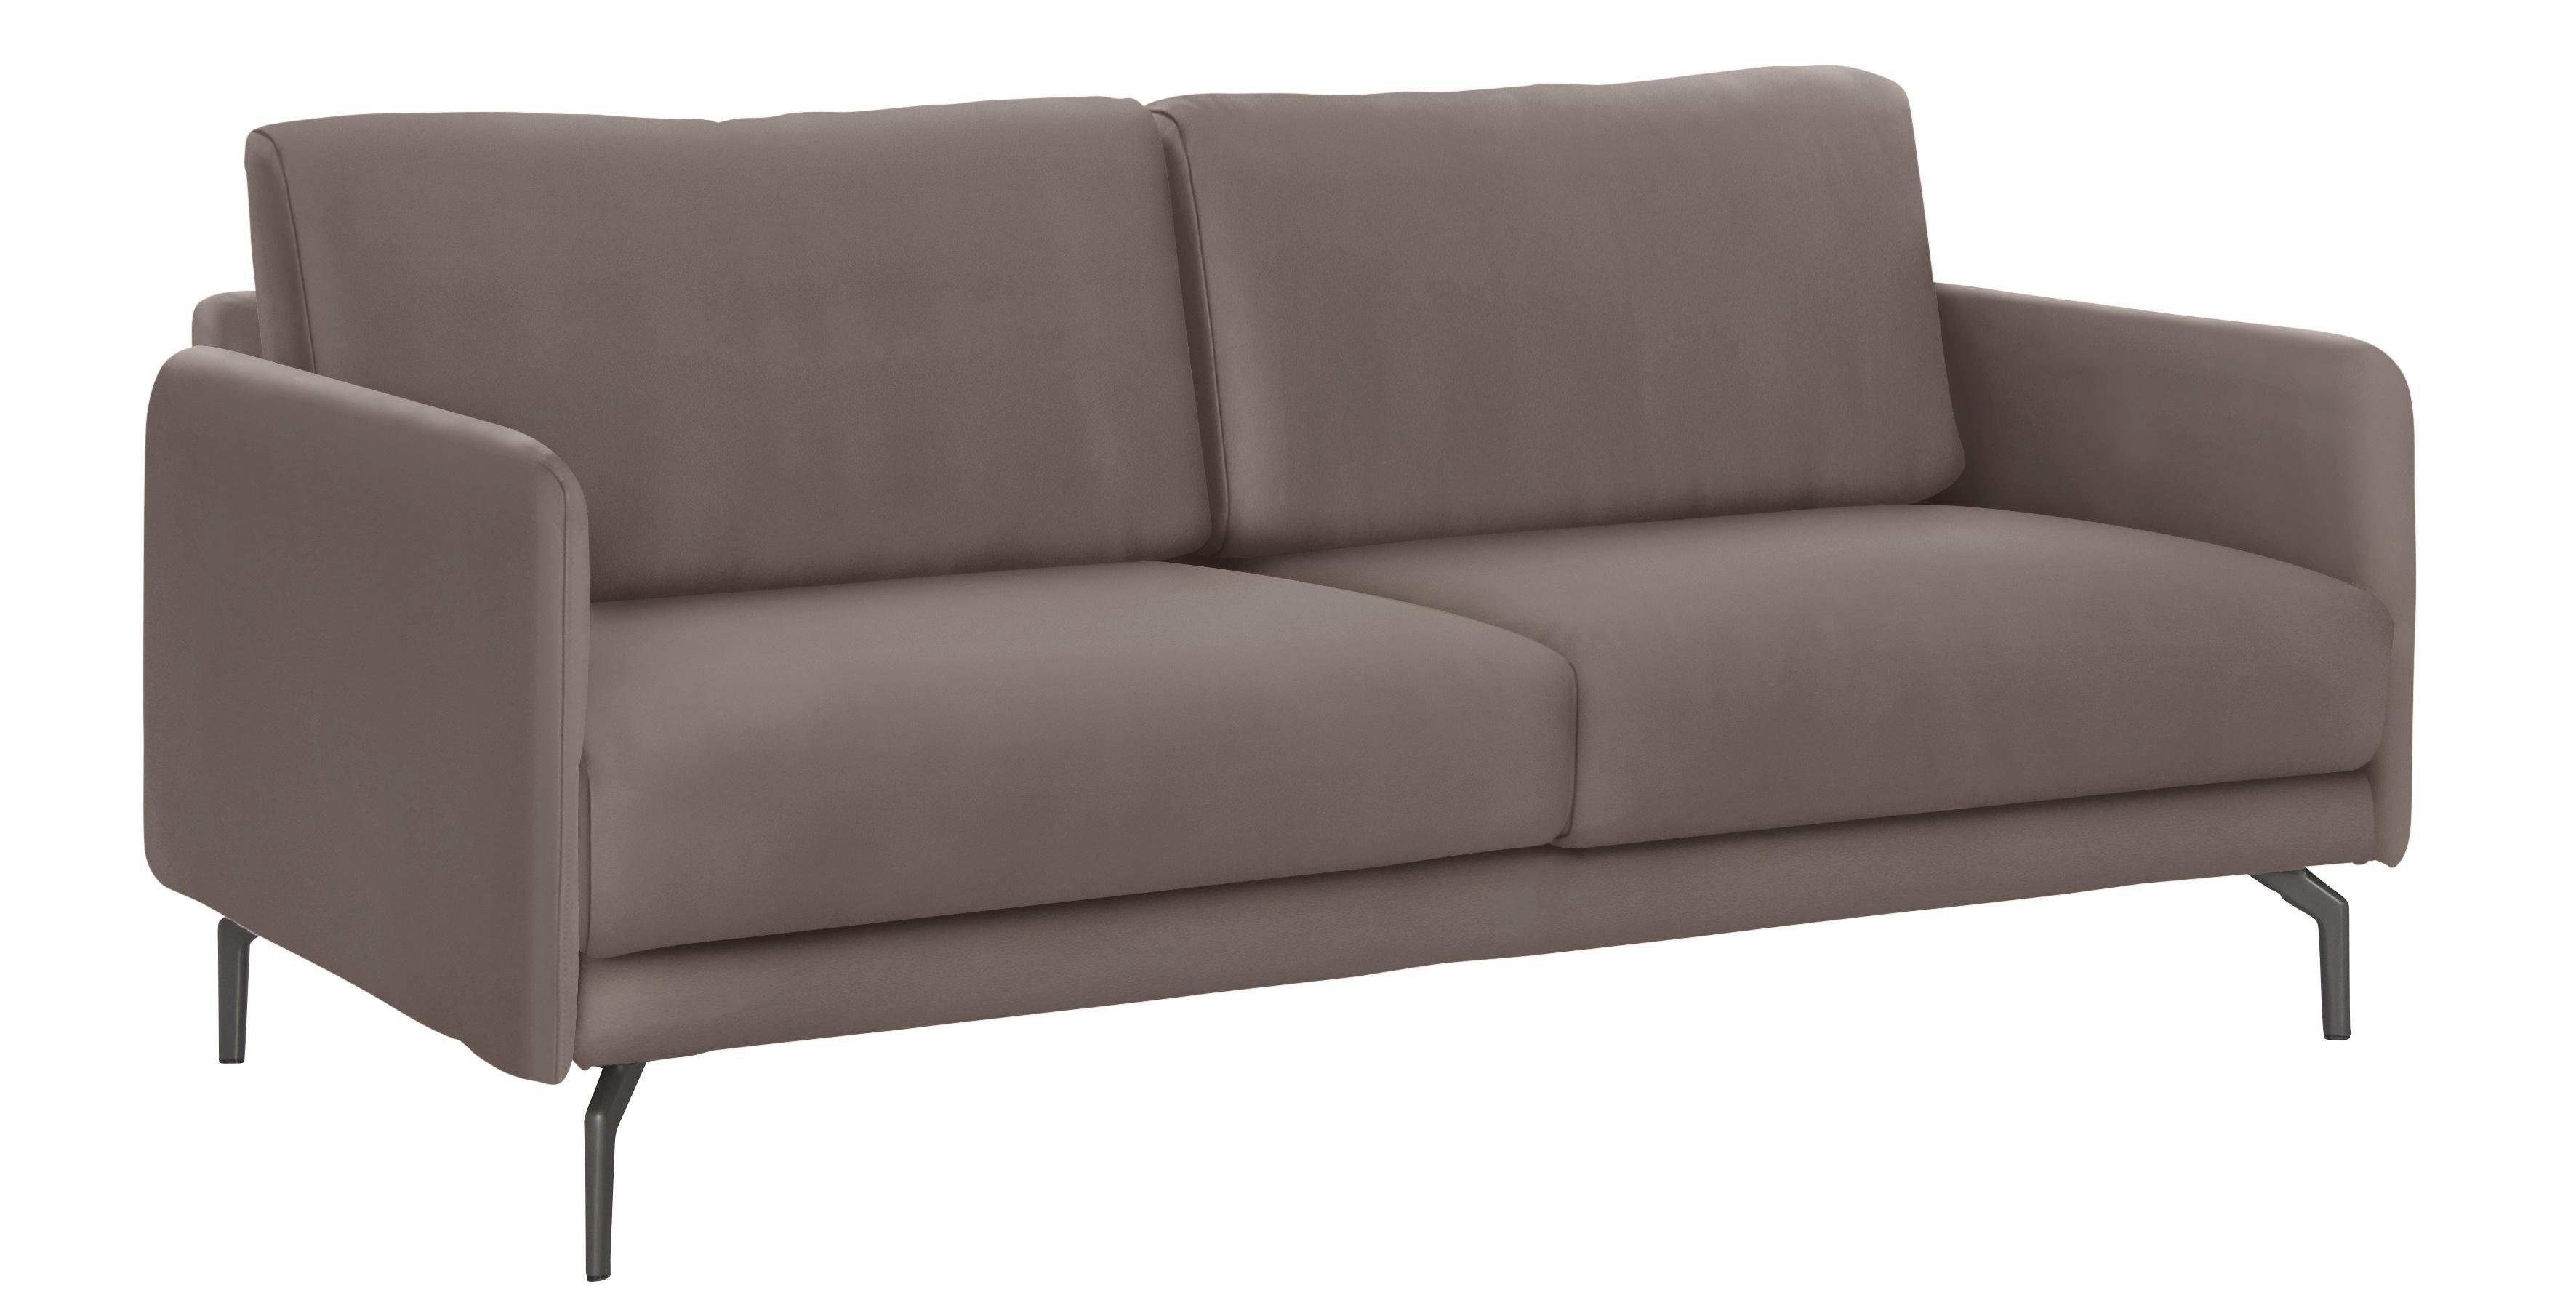 hülsta sofa 3-Sitzer hs.450, Armlehne Umbragrau Breite cm, 190 Alugussfuß schmal, sehr